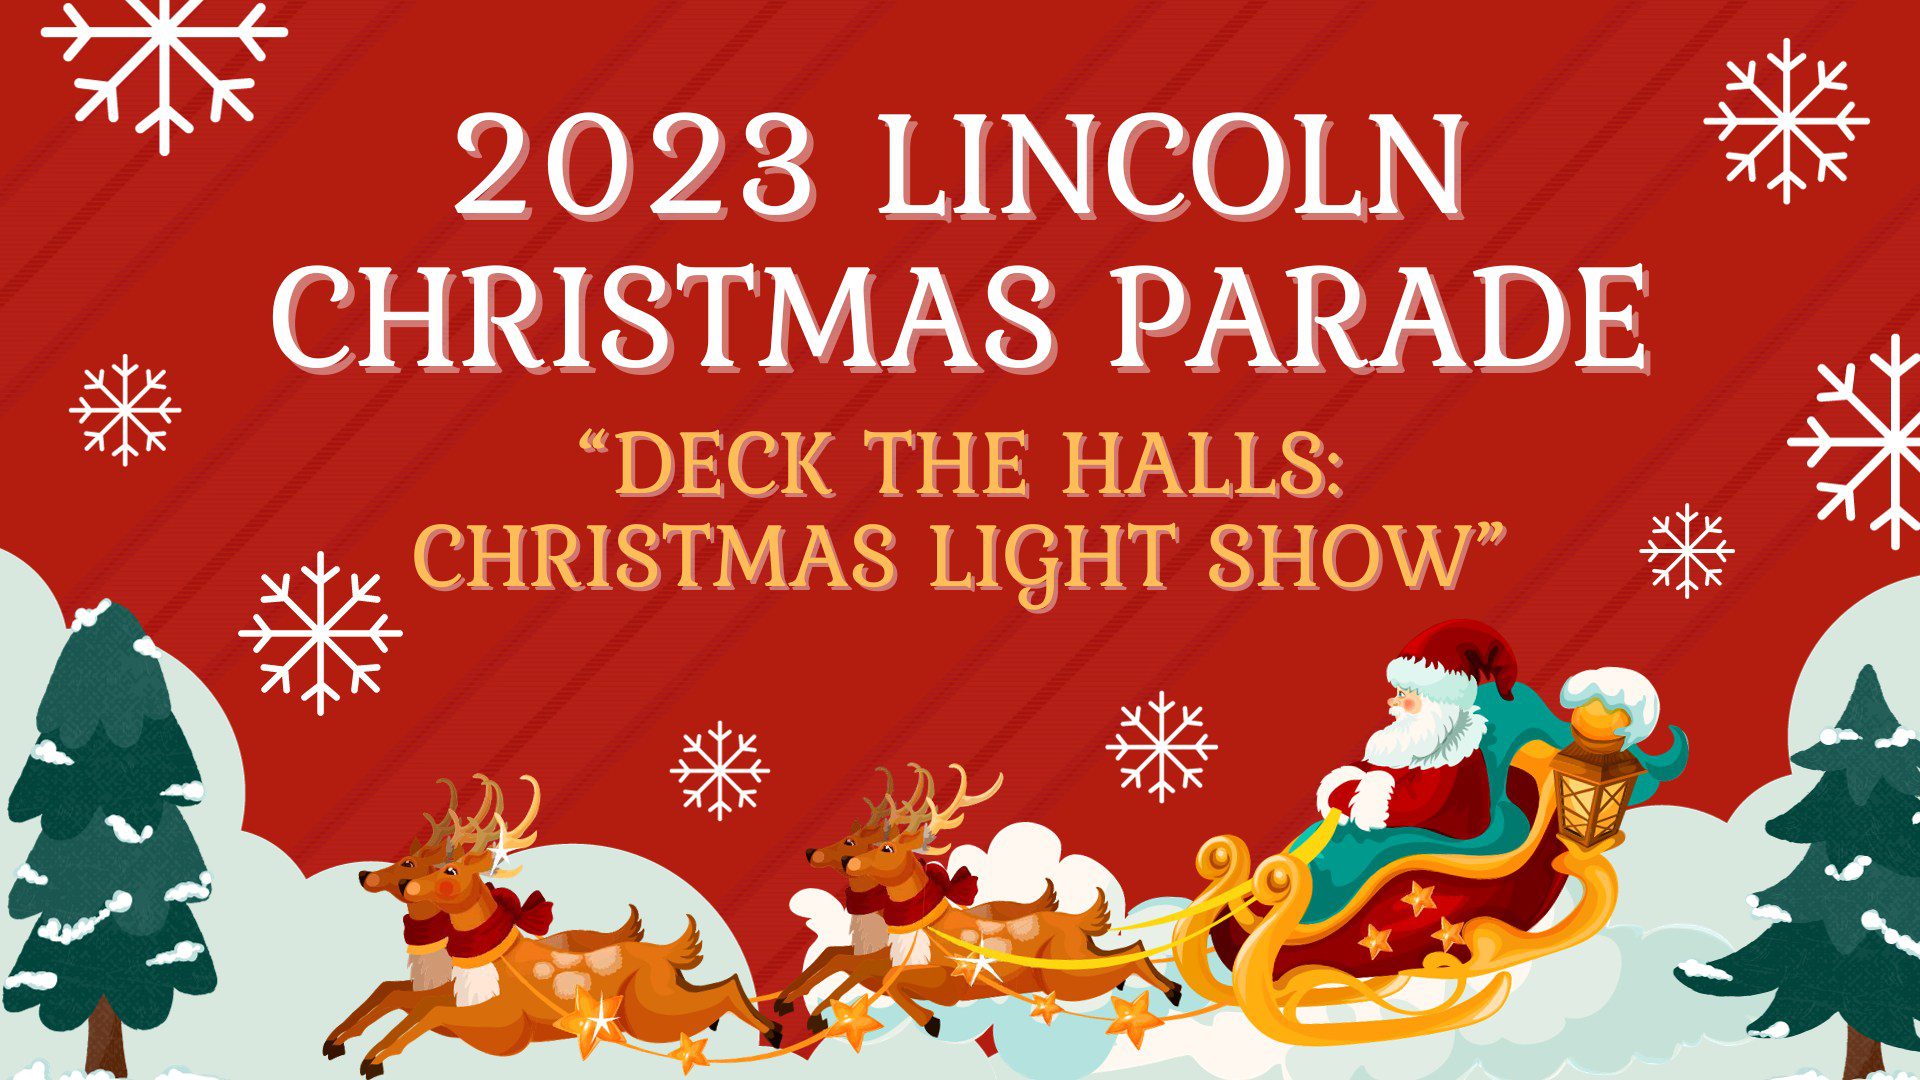 Lincoln Christmas Express & Lincoln Christmas Parade